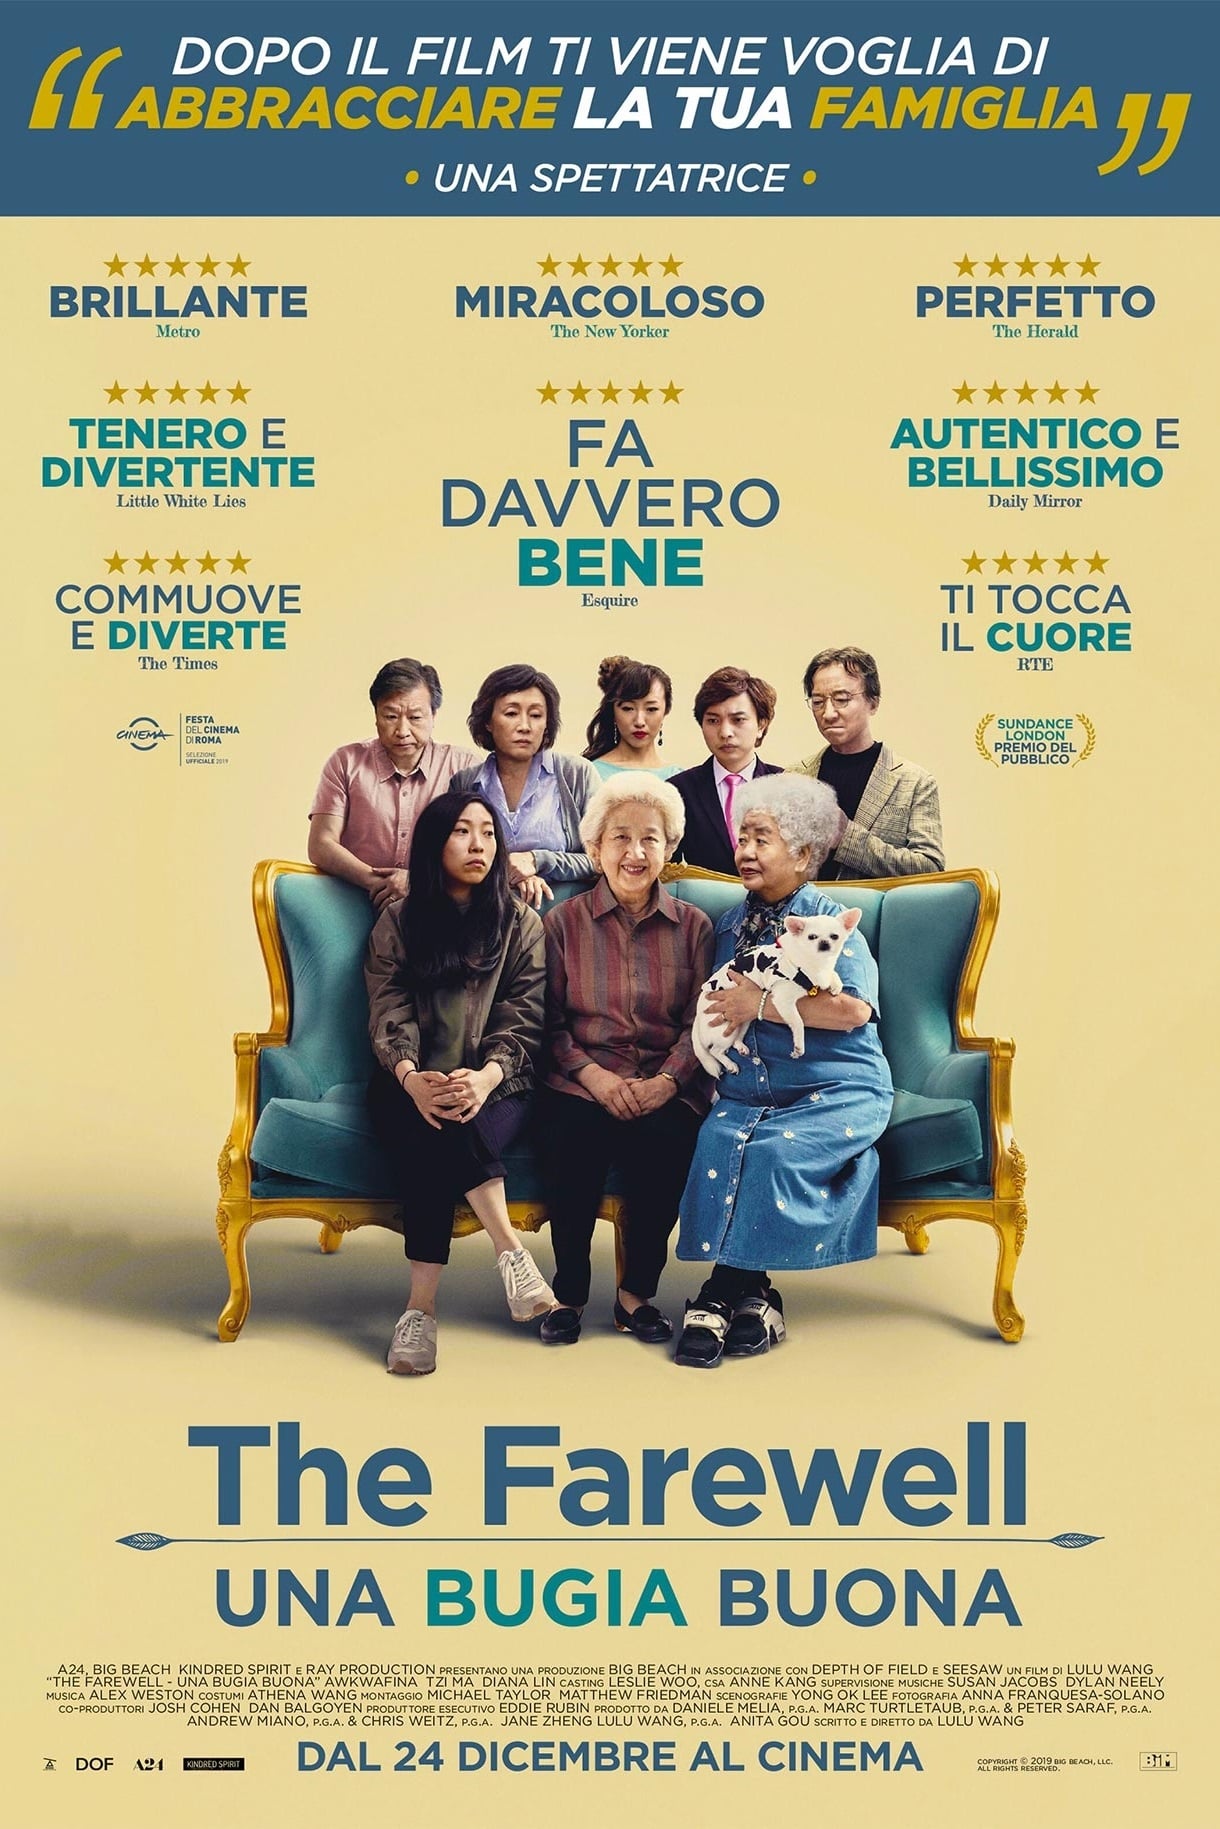 Poster for the movie "The Farewell - Una bugia buona"